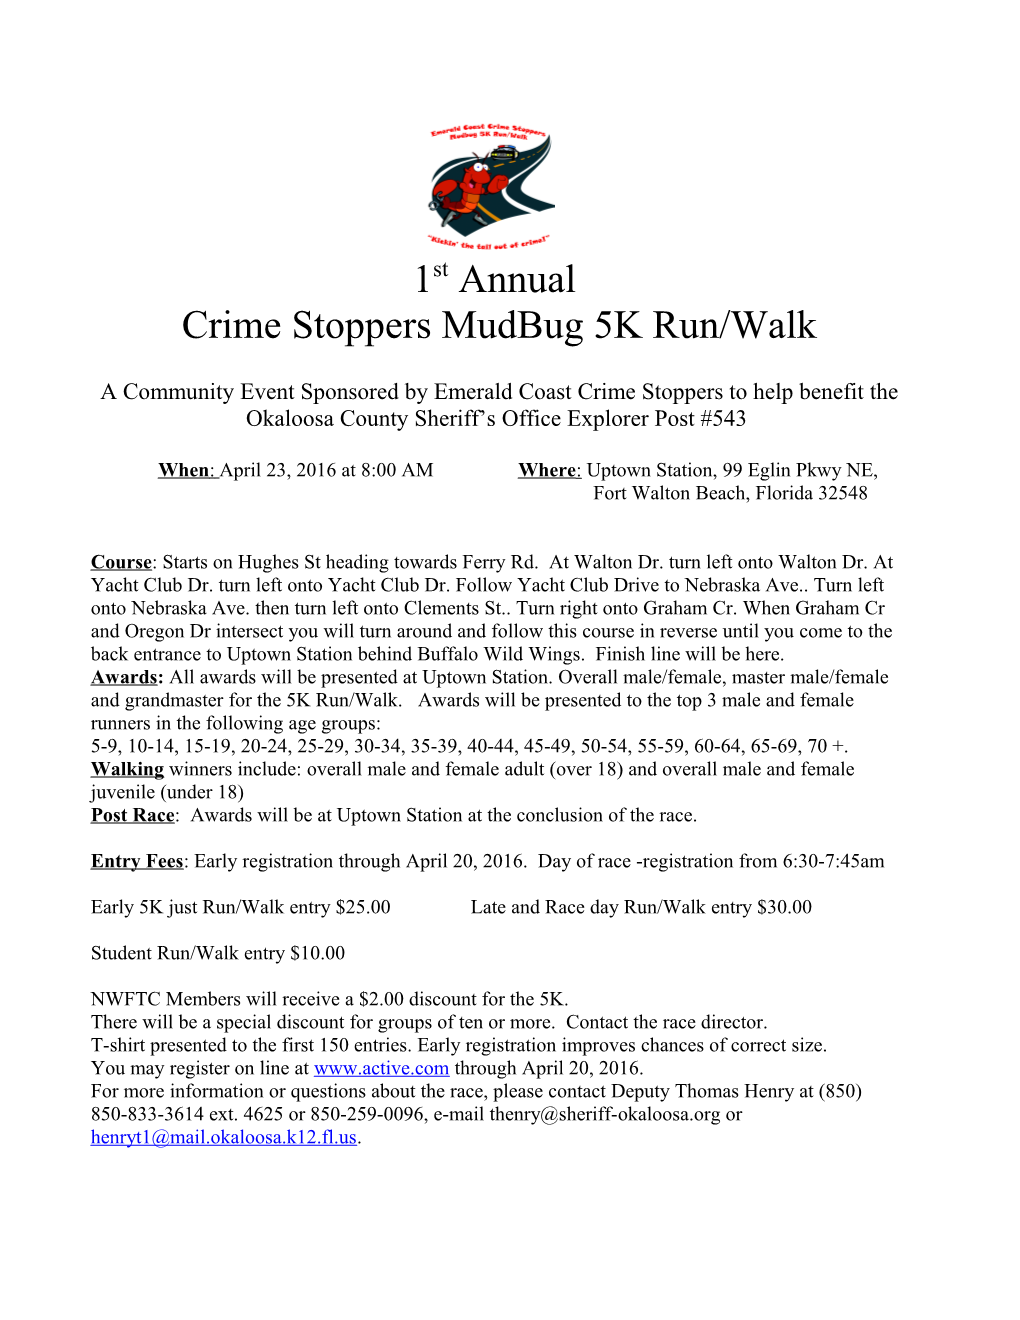 Crime Stoppers Mudbug 5K Run/Walk